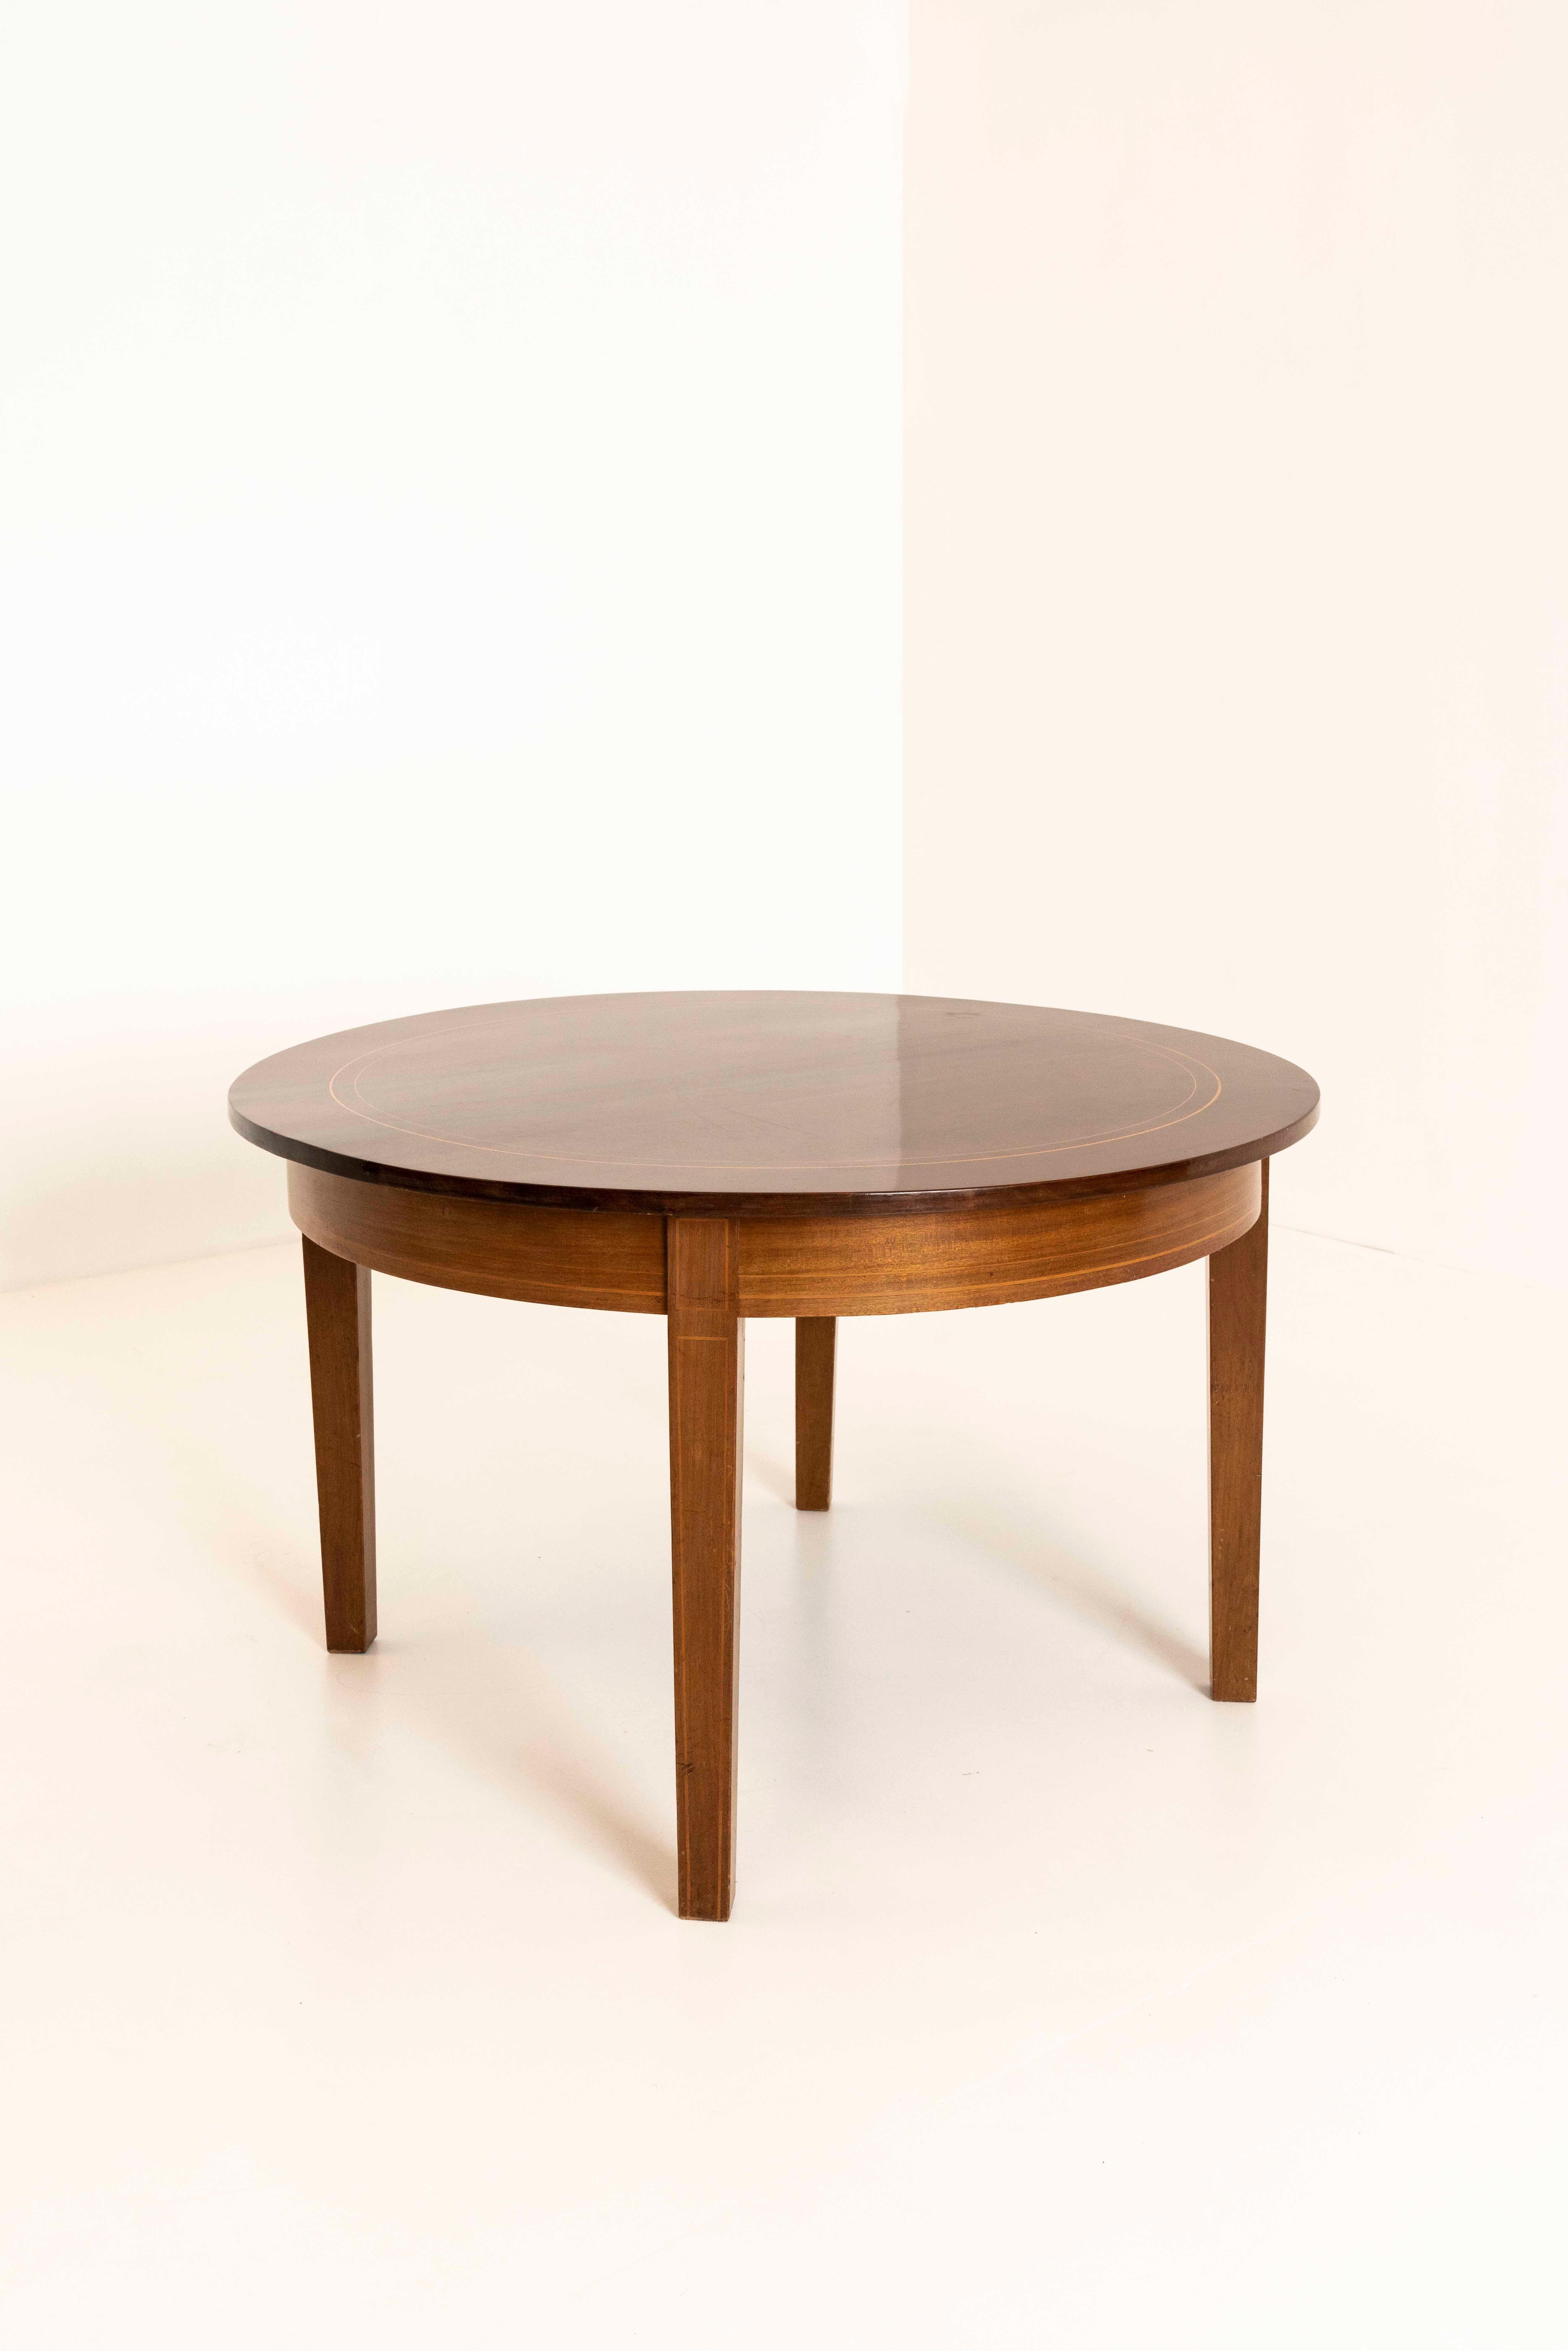 Scandinavian Modern Danish Round Coffee Table in Mahogany, 1960s For Sale